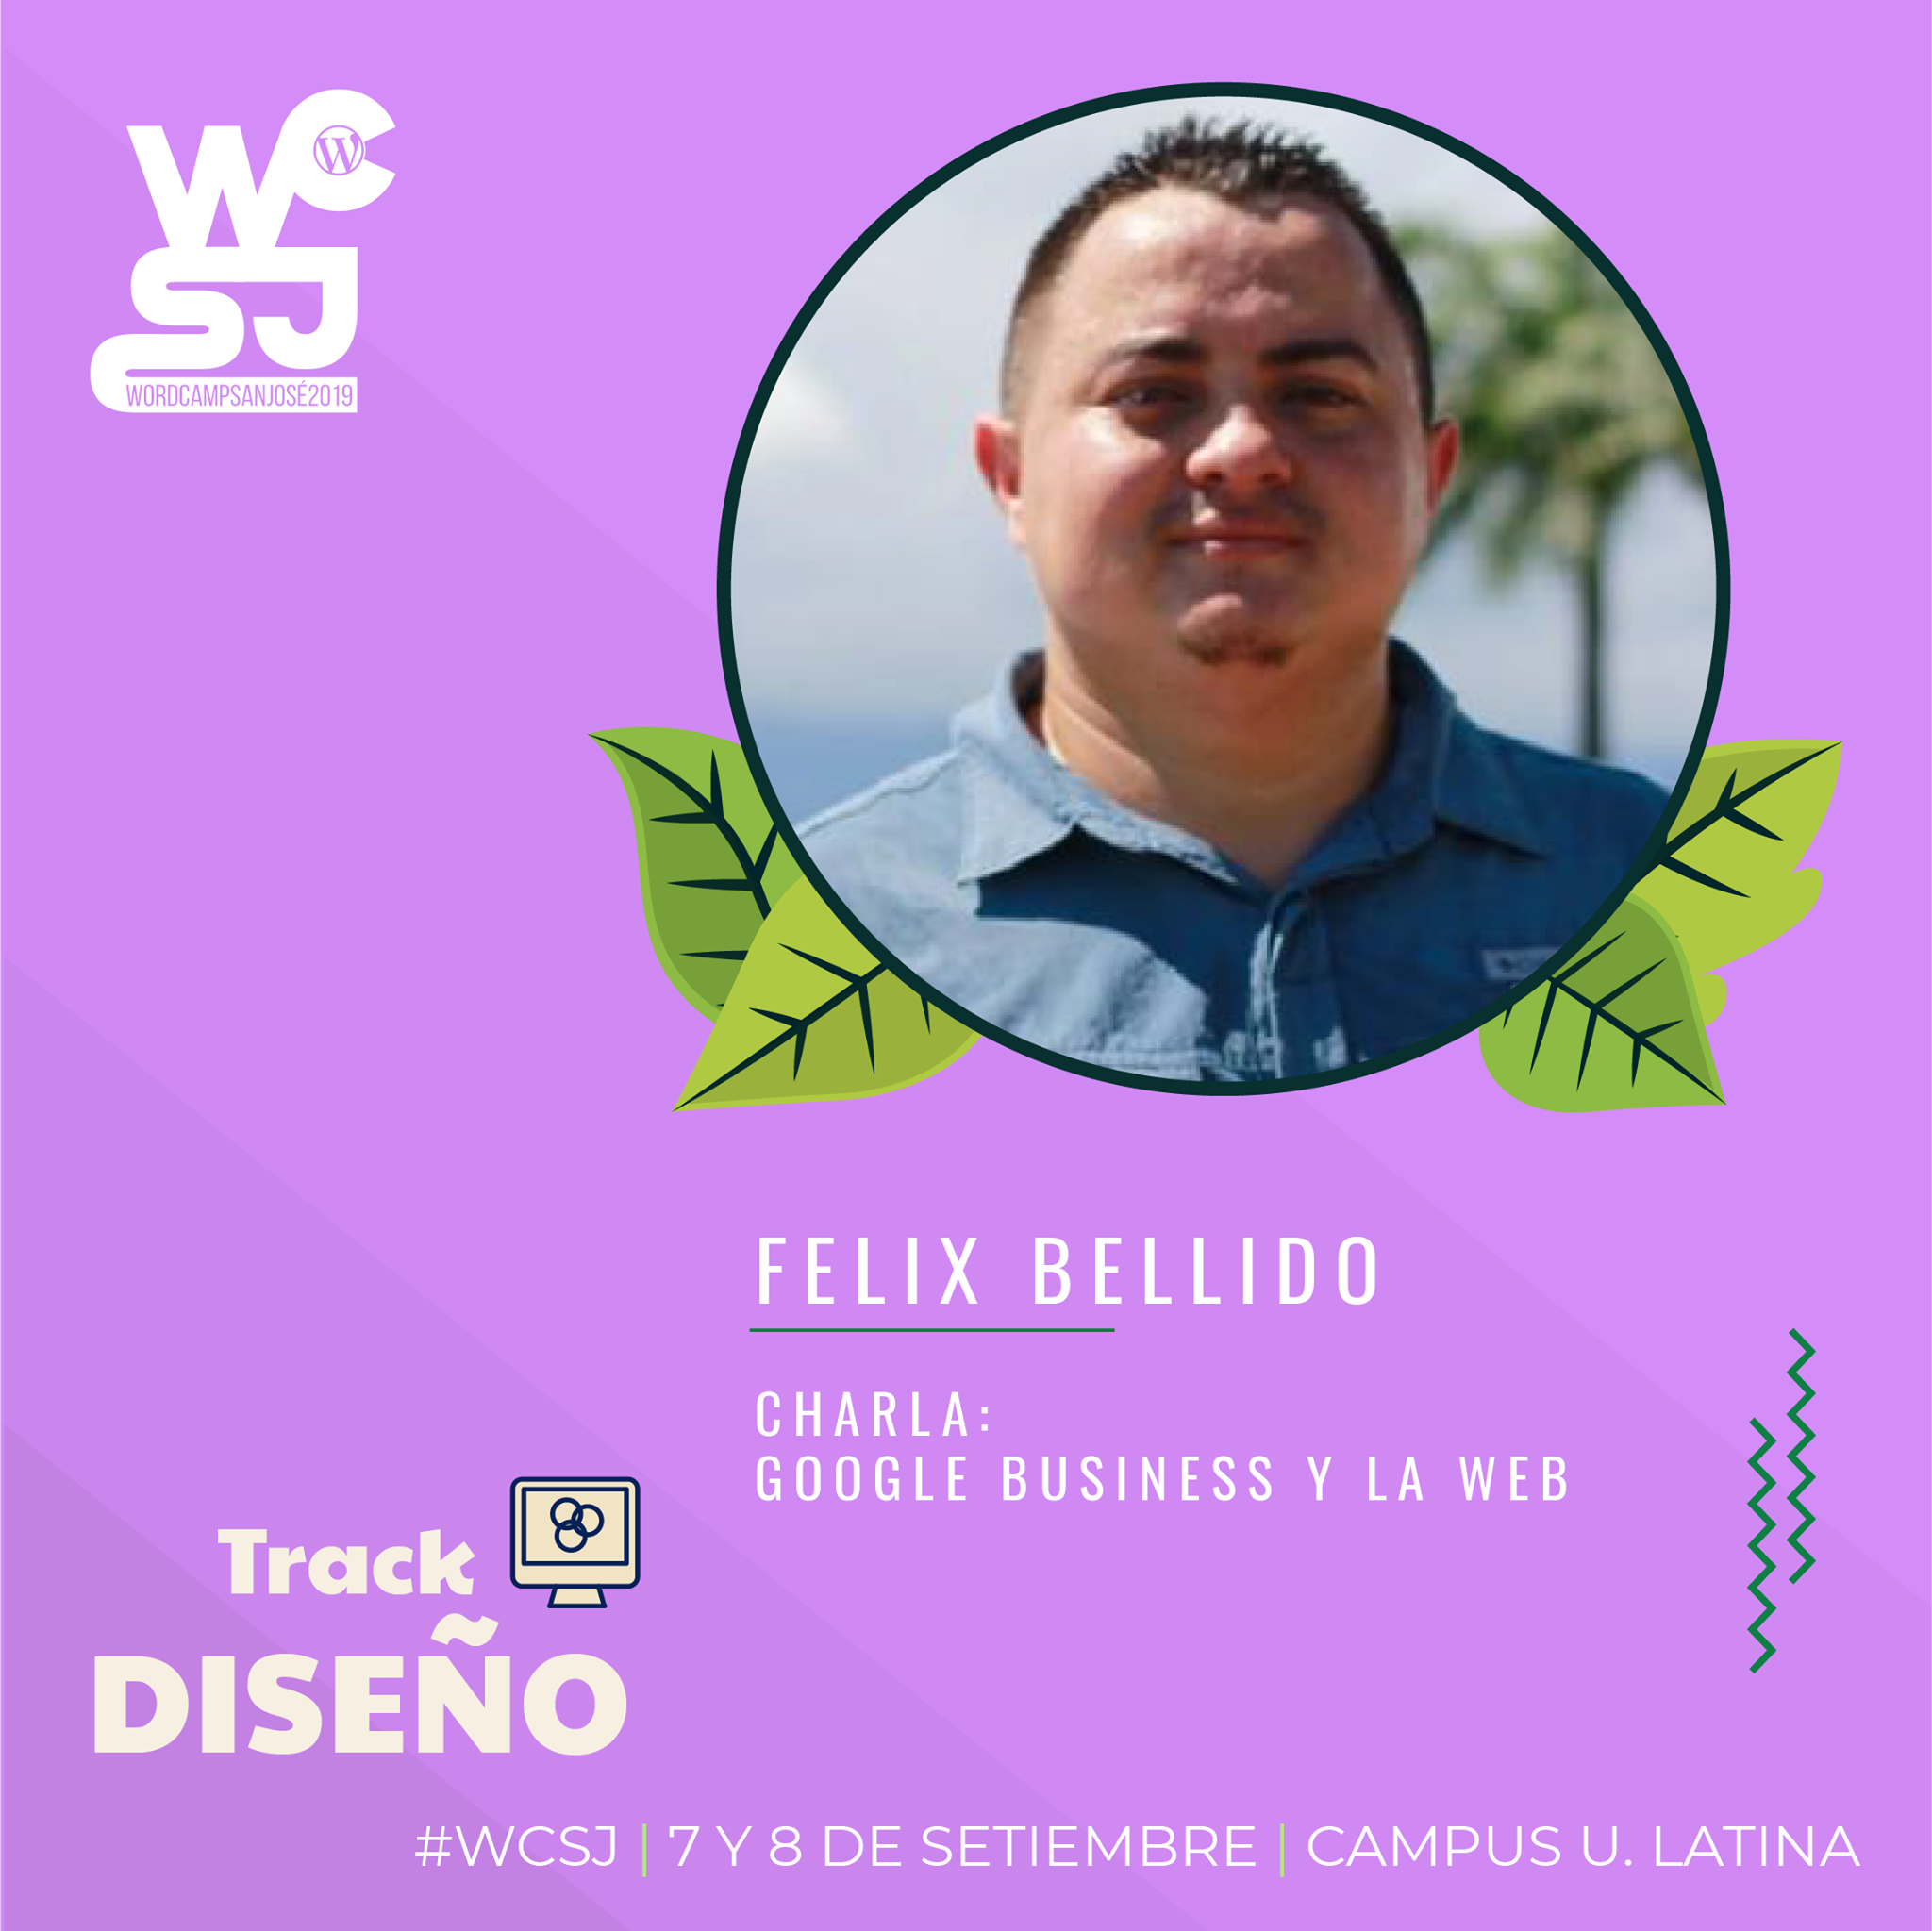 Felix Bellido